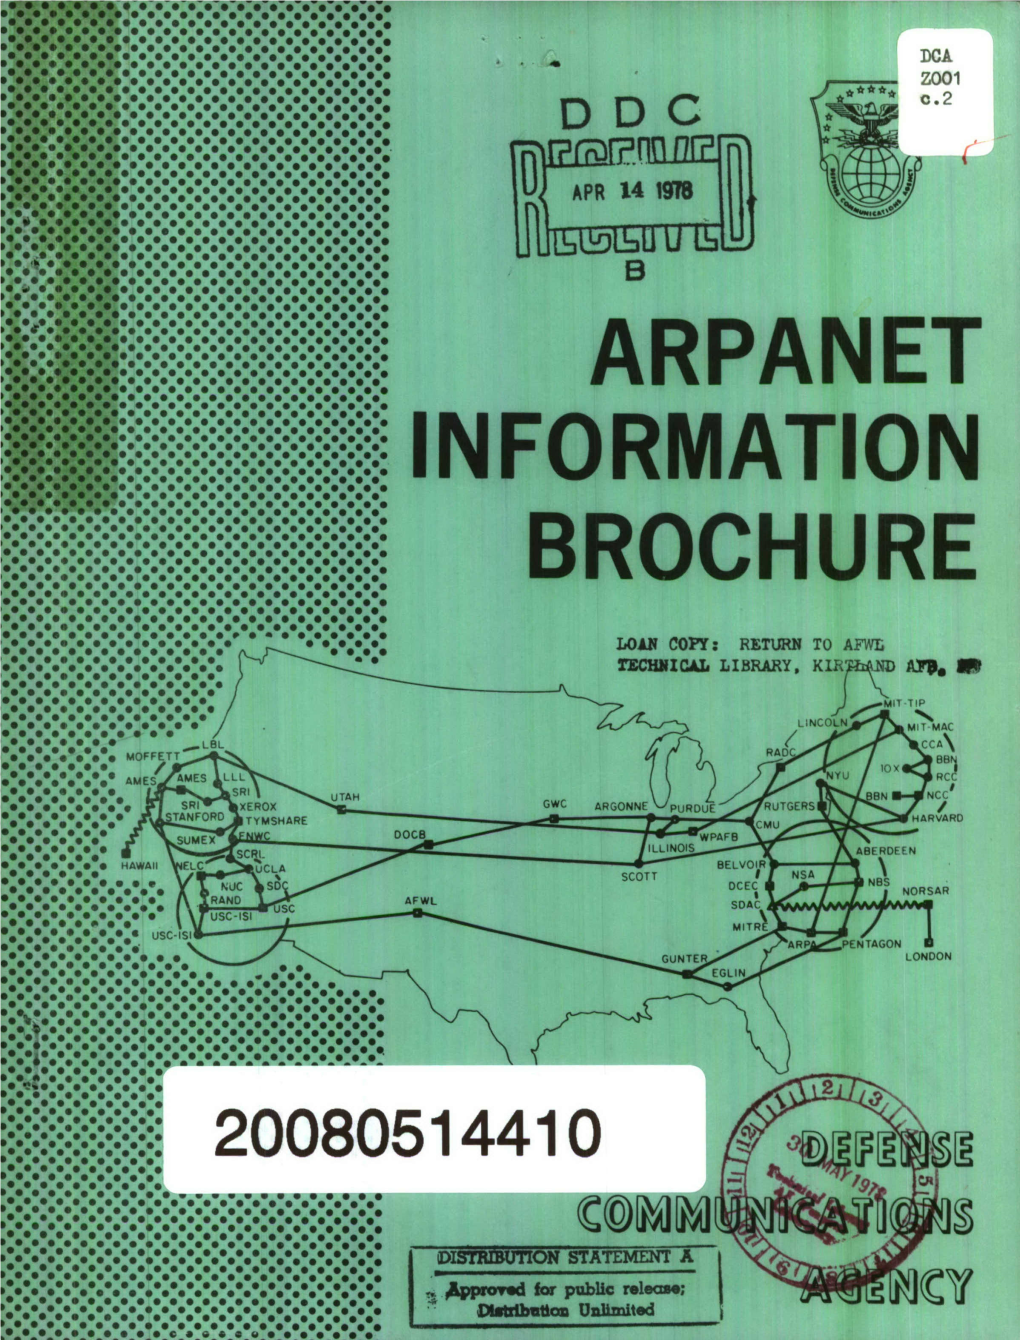 ARPANET Information Brochure